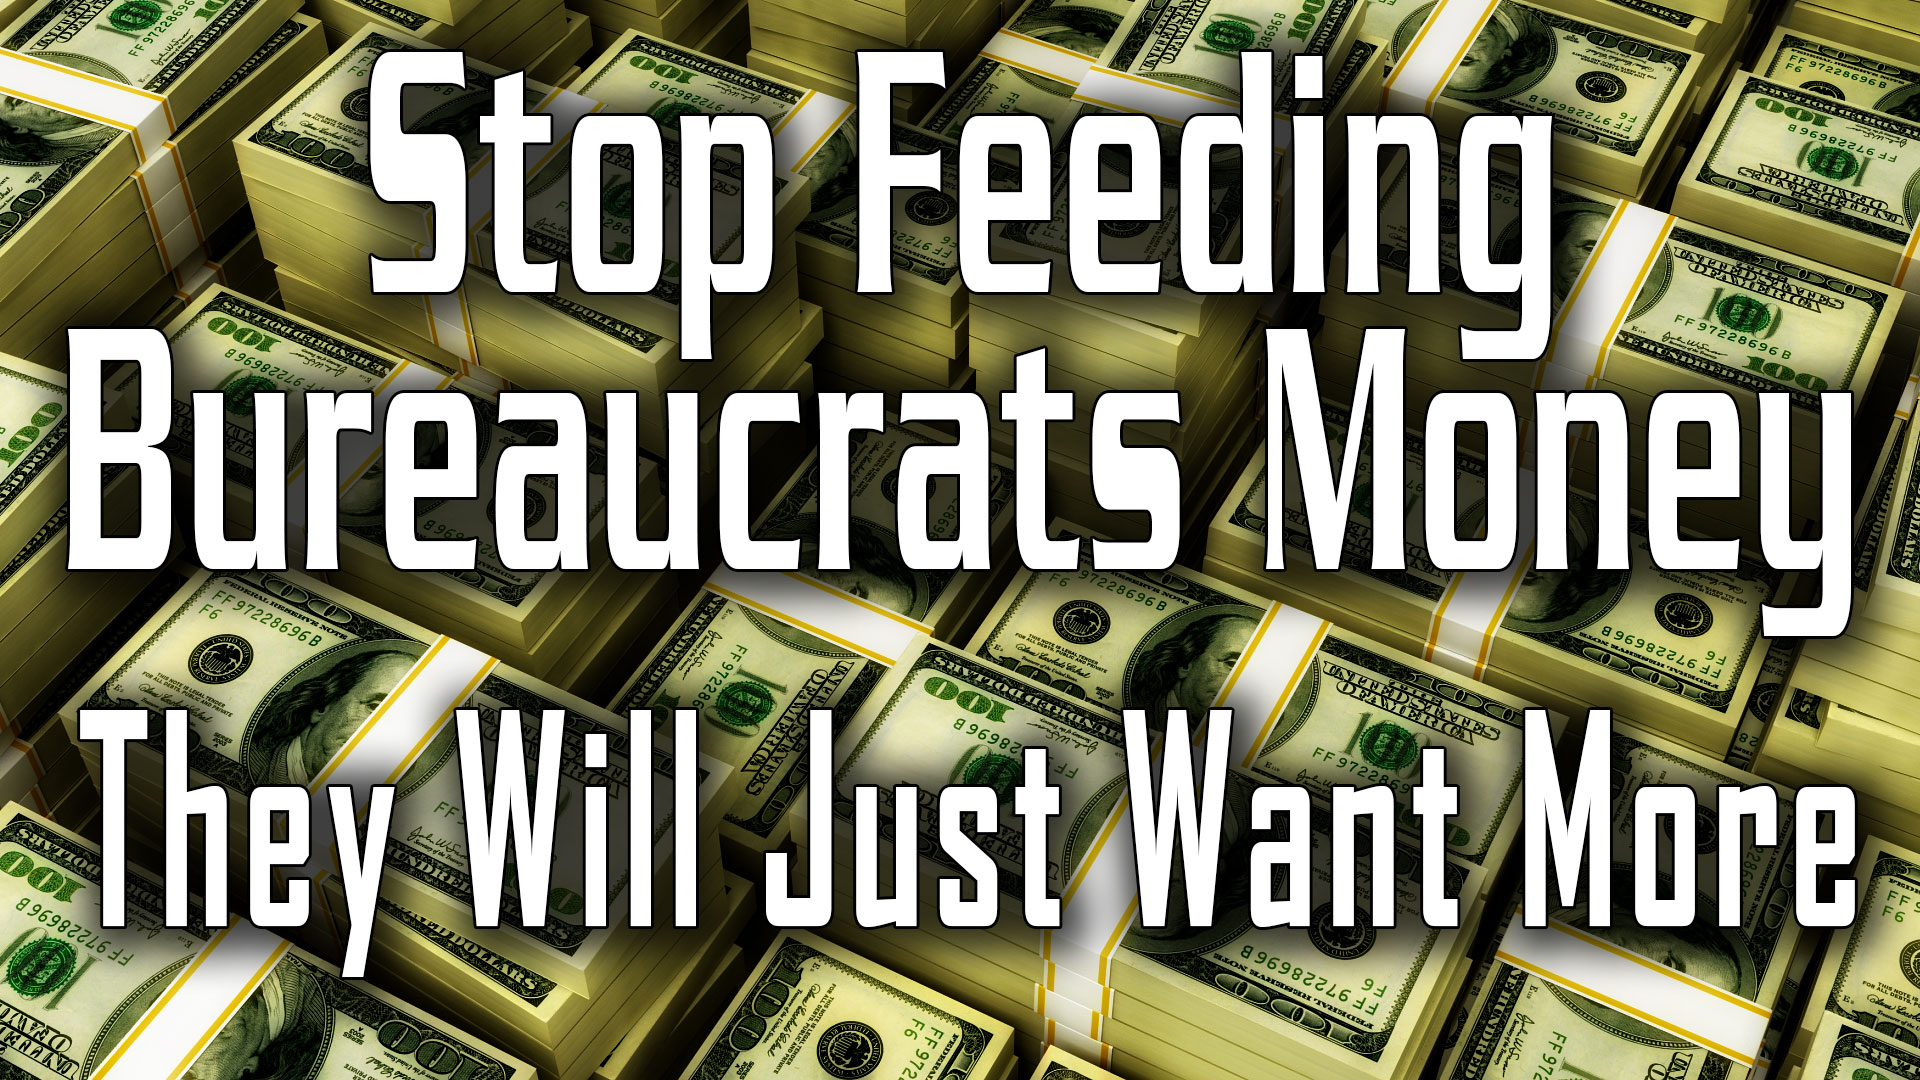 bureaucrats_stop_feeding